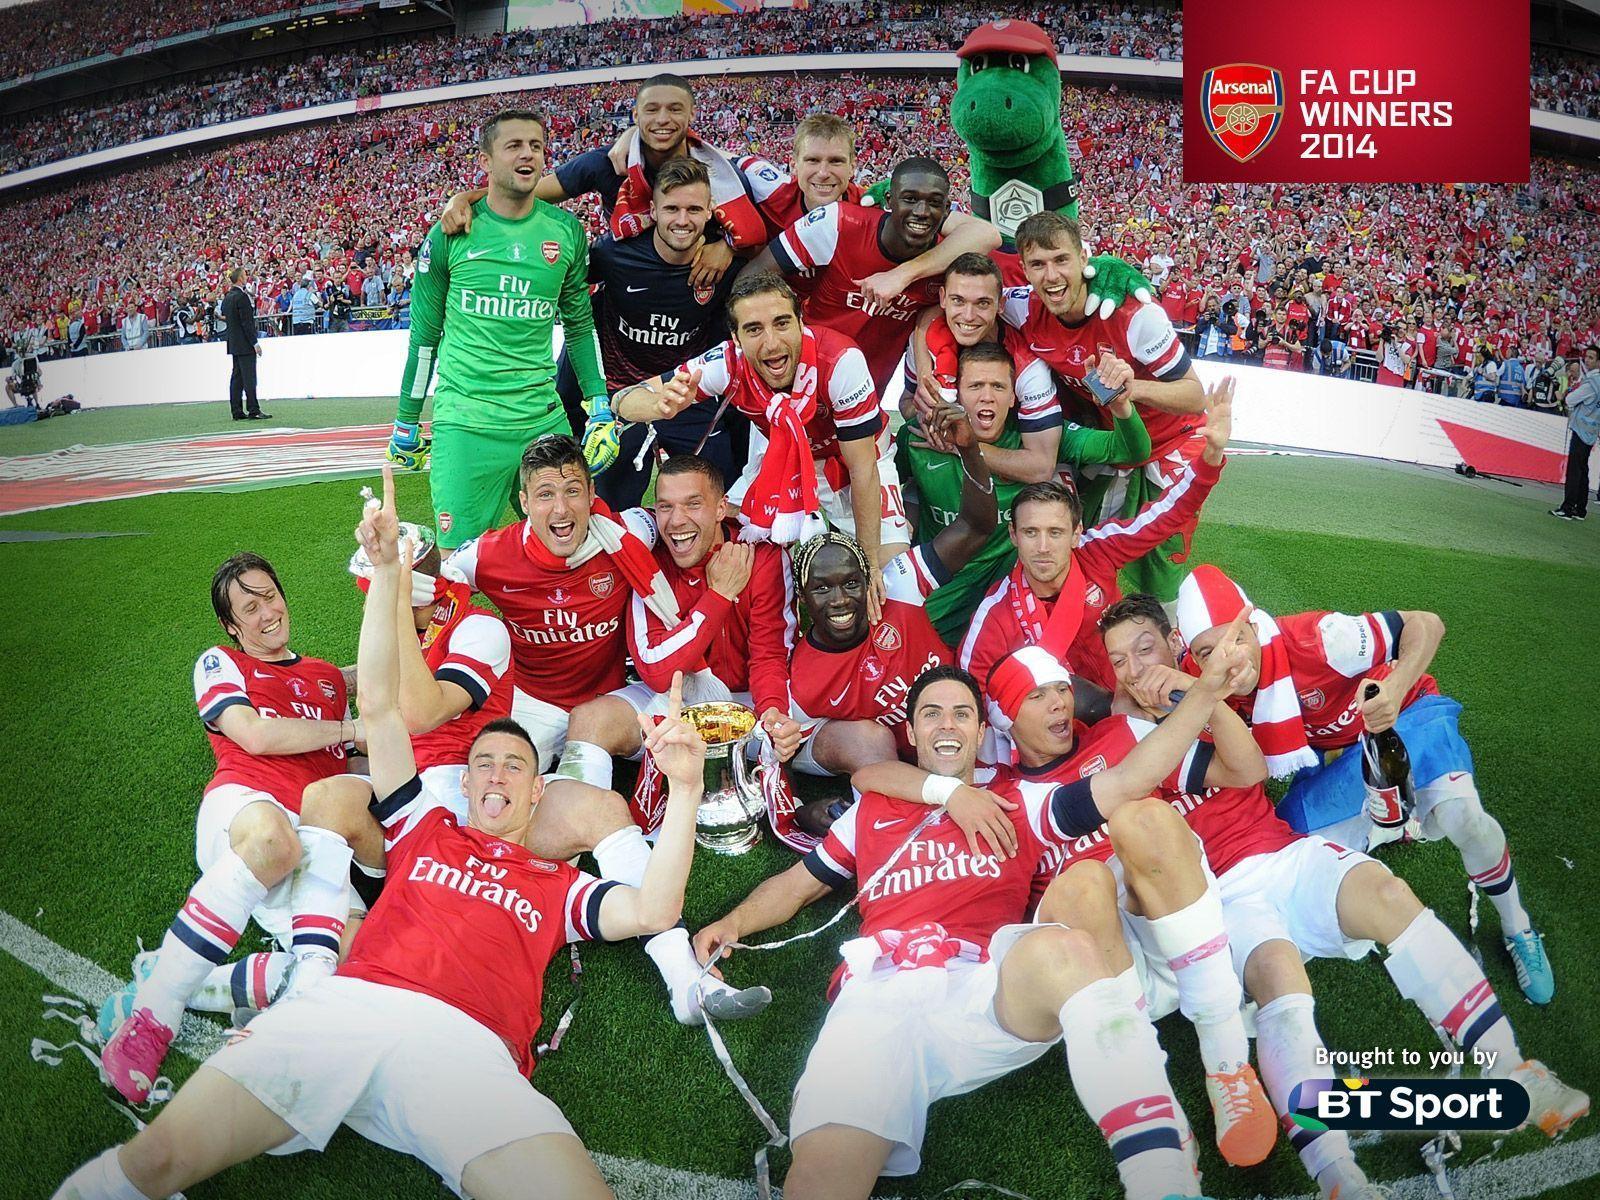 gun__1400488243_1 Arsenal Football HD free wallpaper background